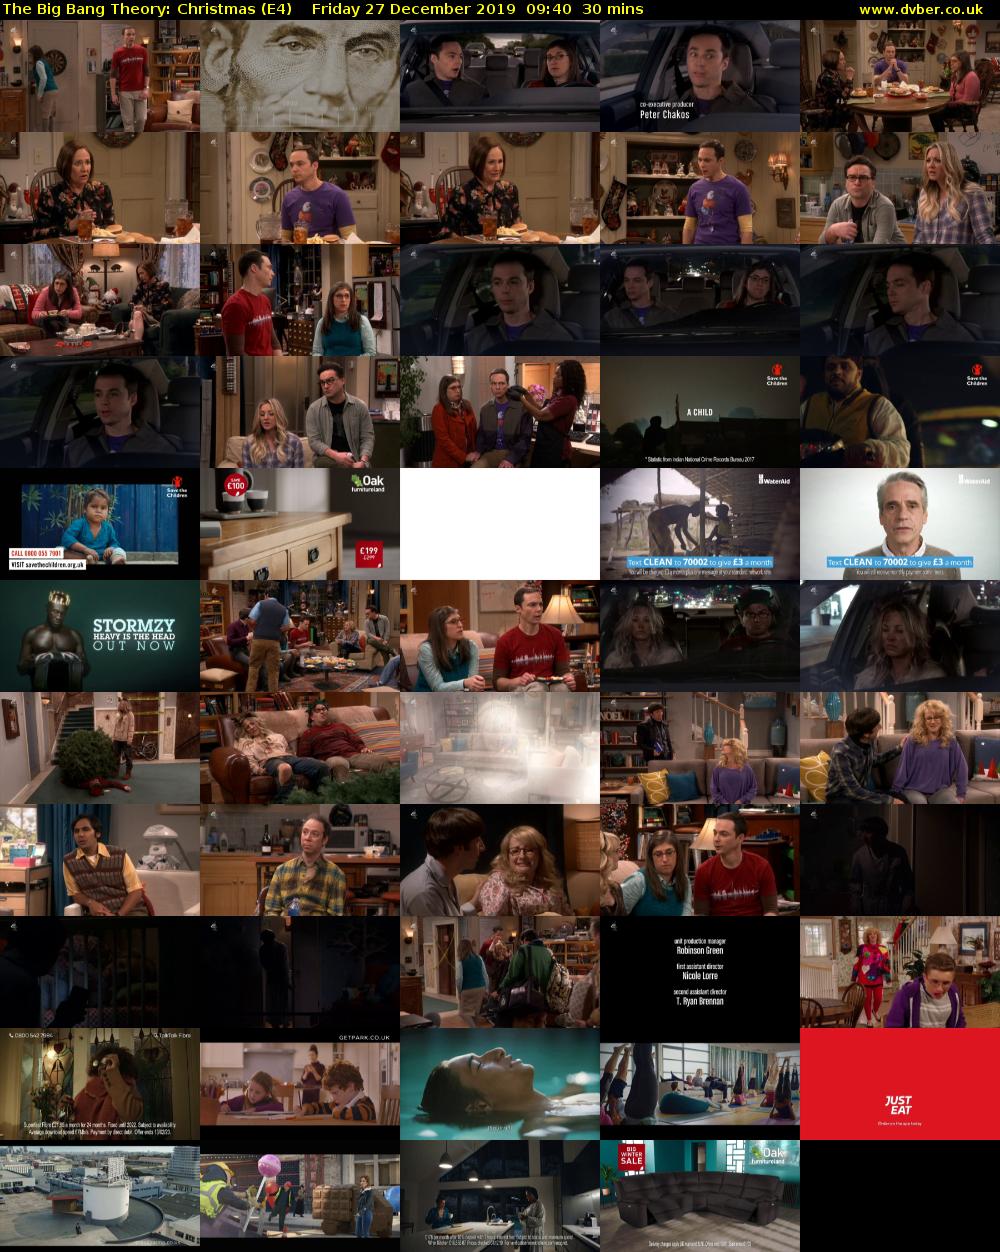 The Big Bang Theory: Christmas (E4) Friday 27 December 2019 09:40 - 10:10